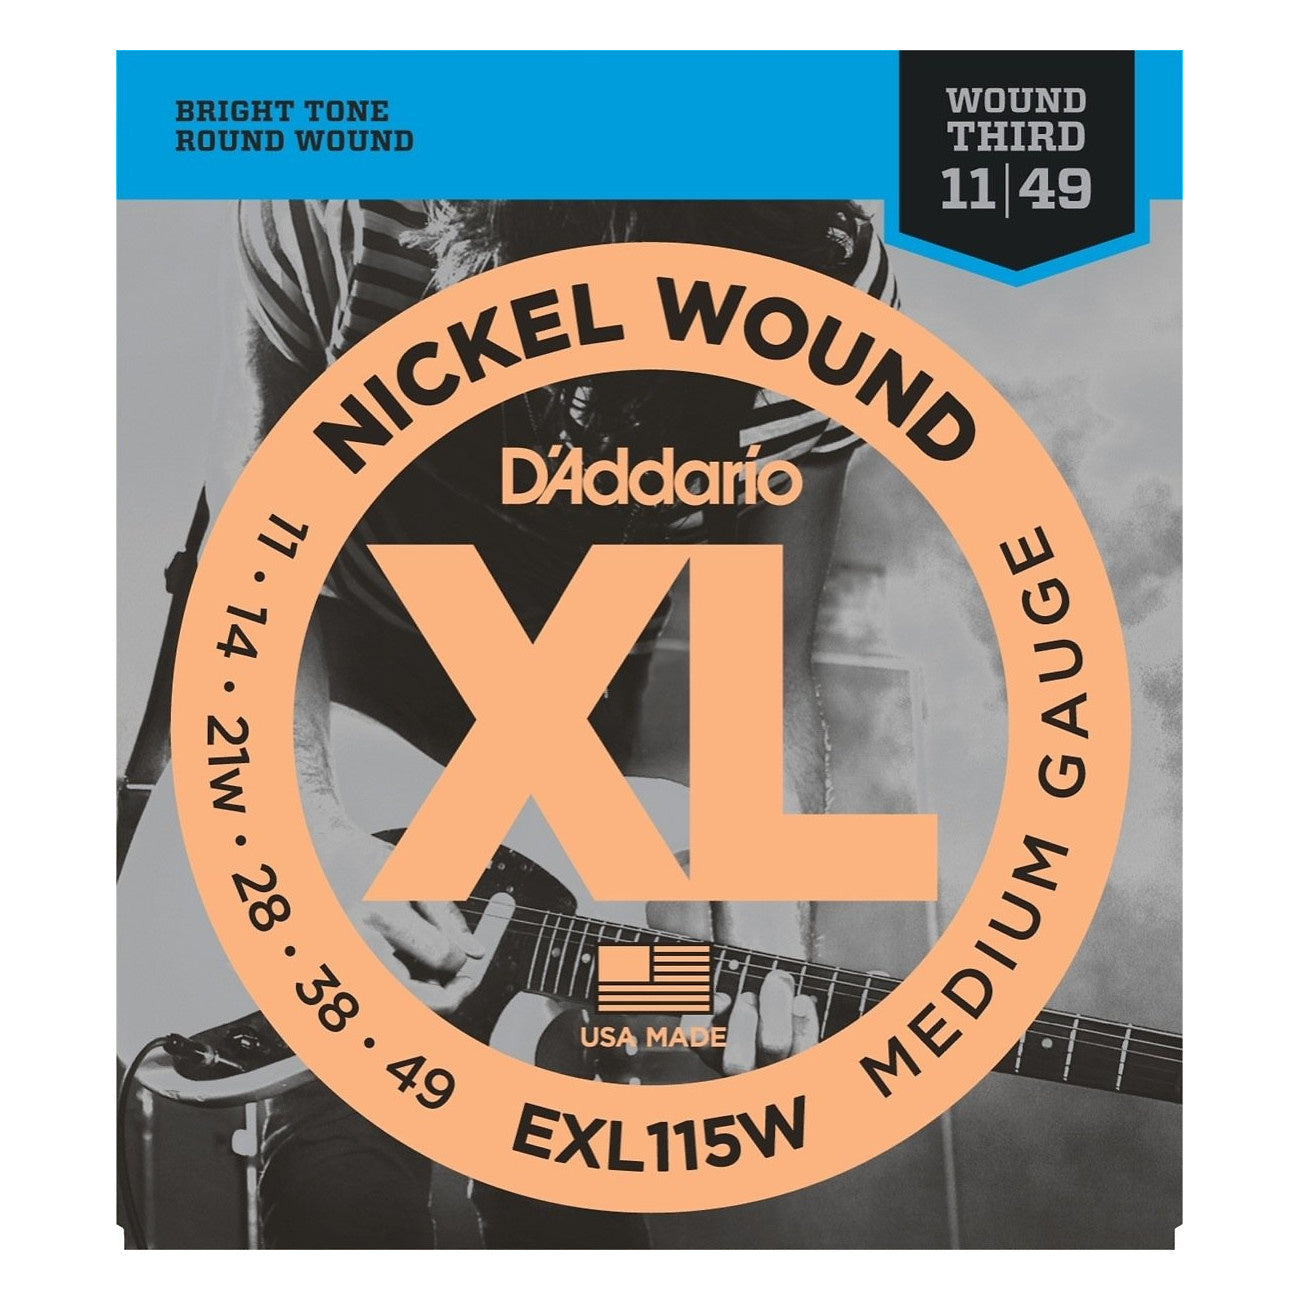 D'Addario EXL115W XL Electric Guitar Strings (Blues/Jazz Rock, Wound Third, 11-49)